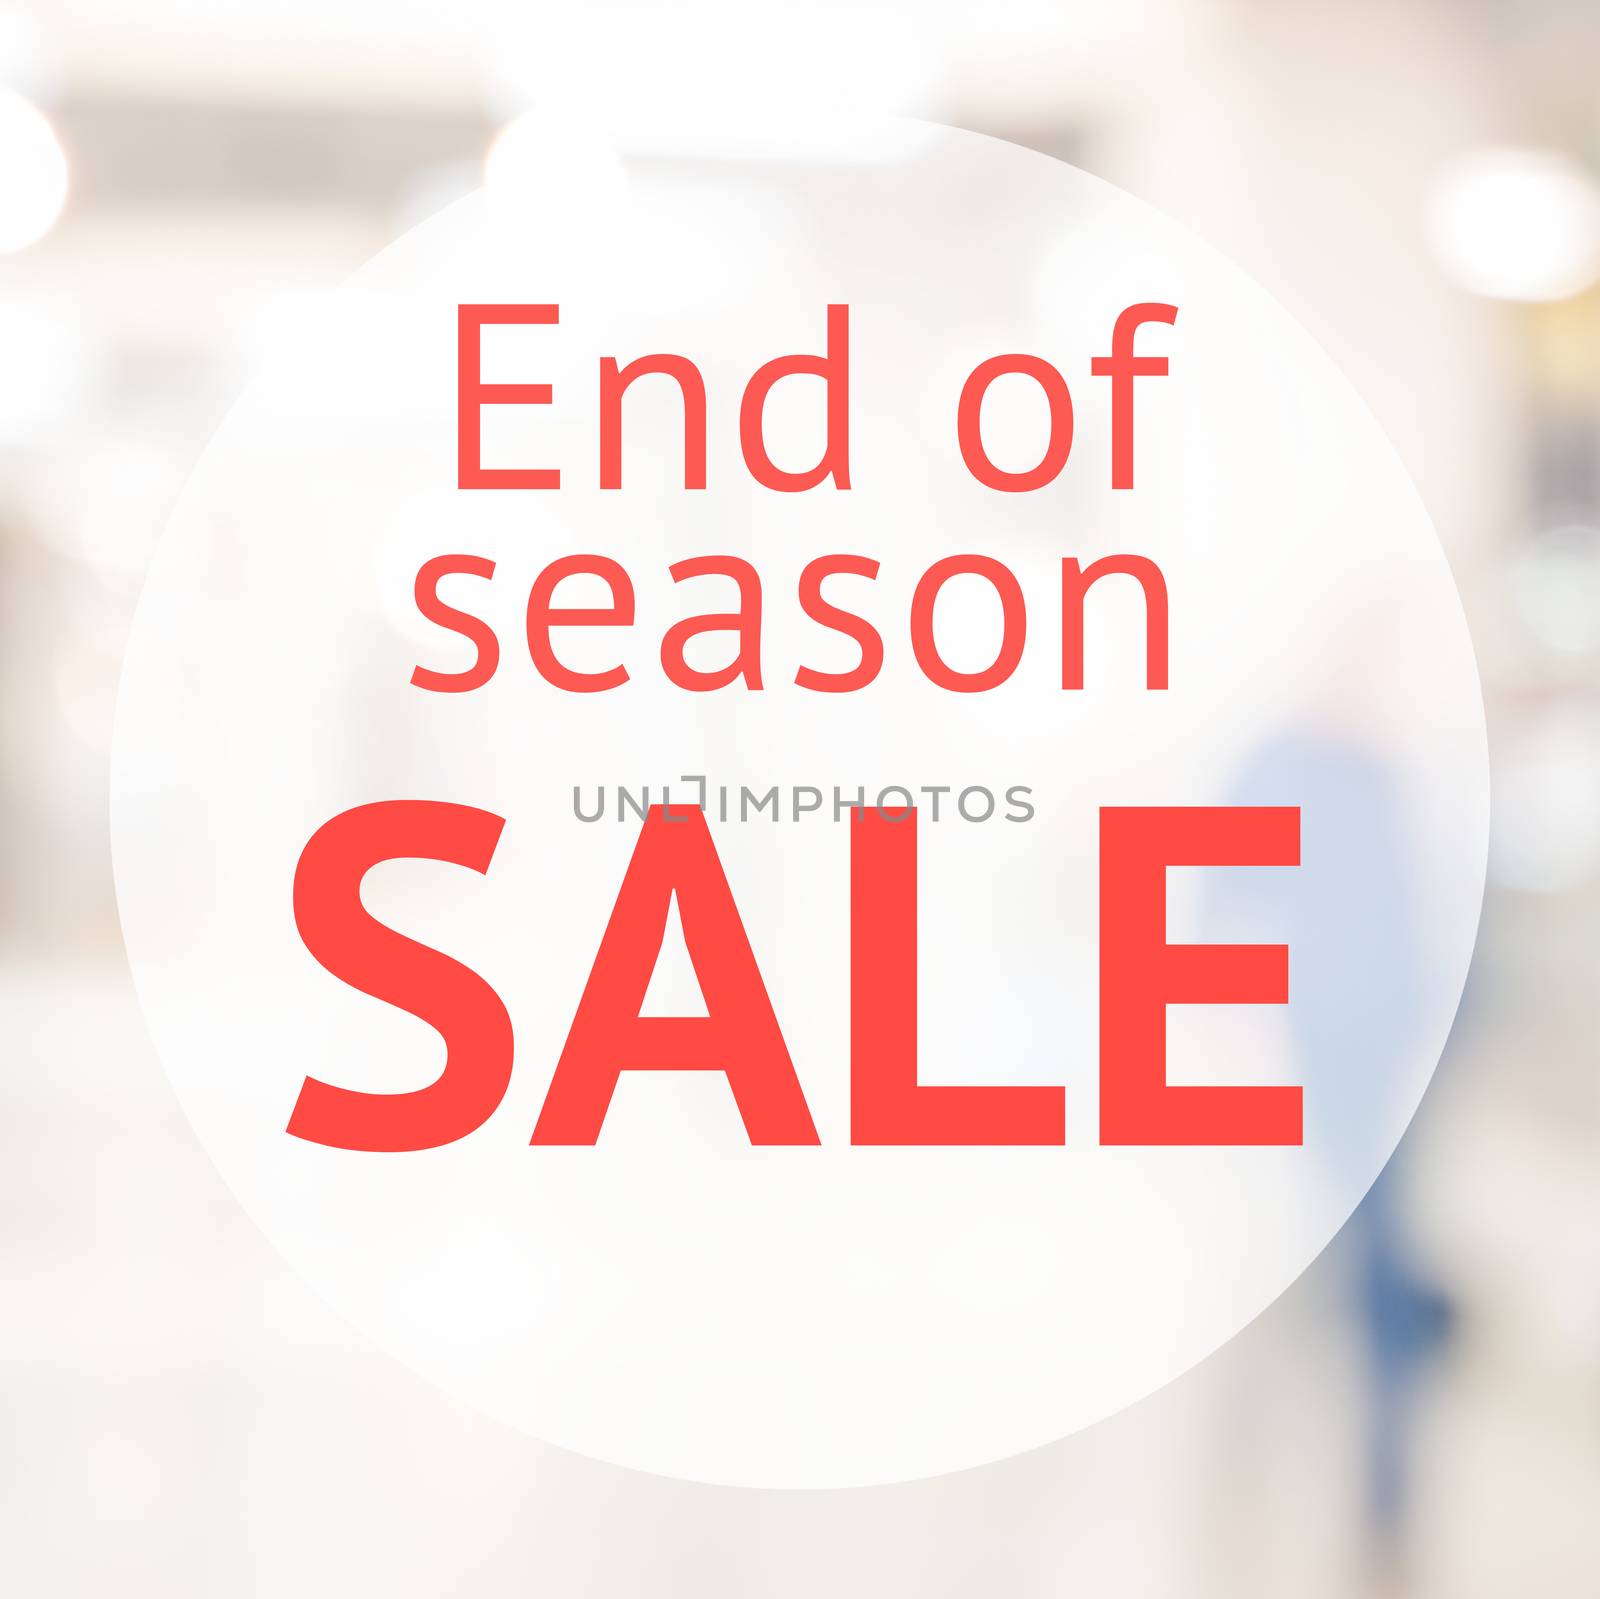 End of season sale sign by fascinadora